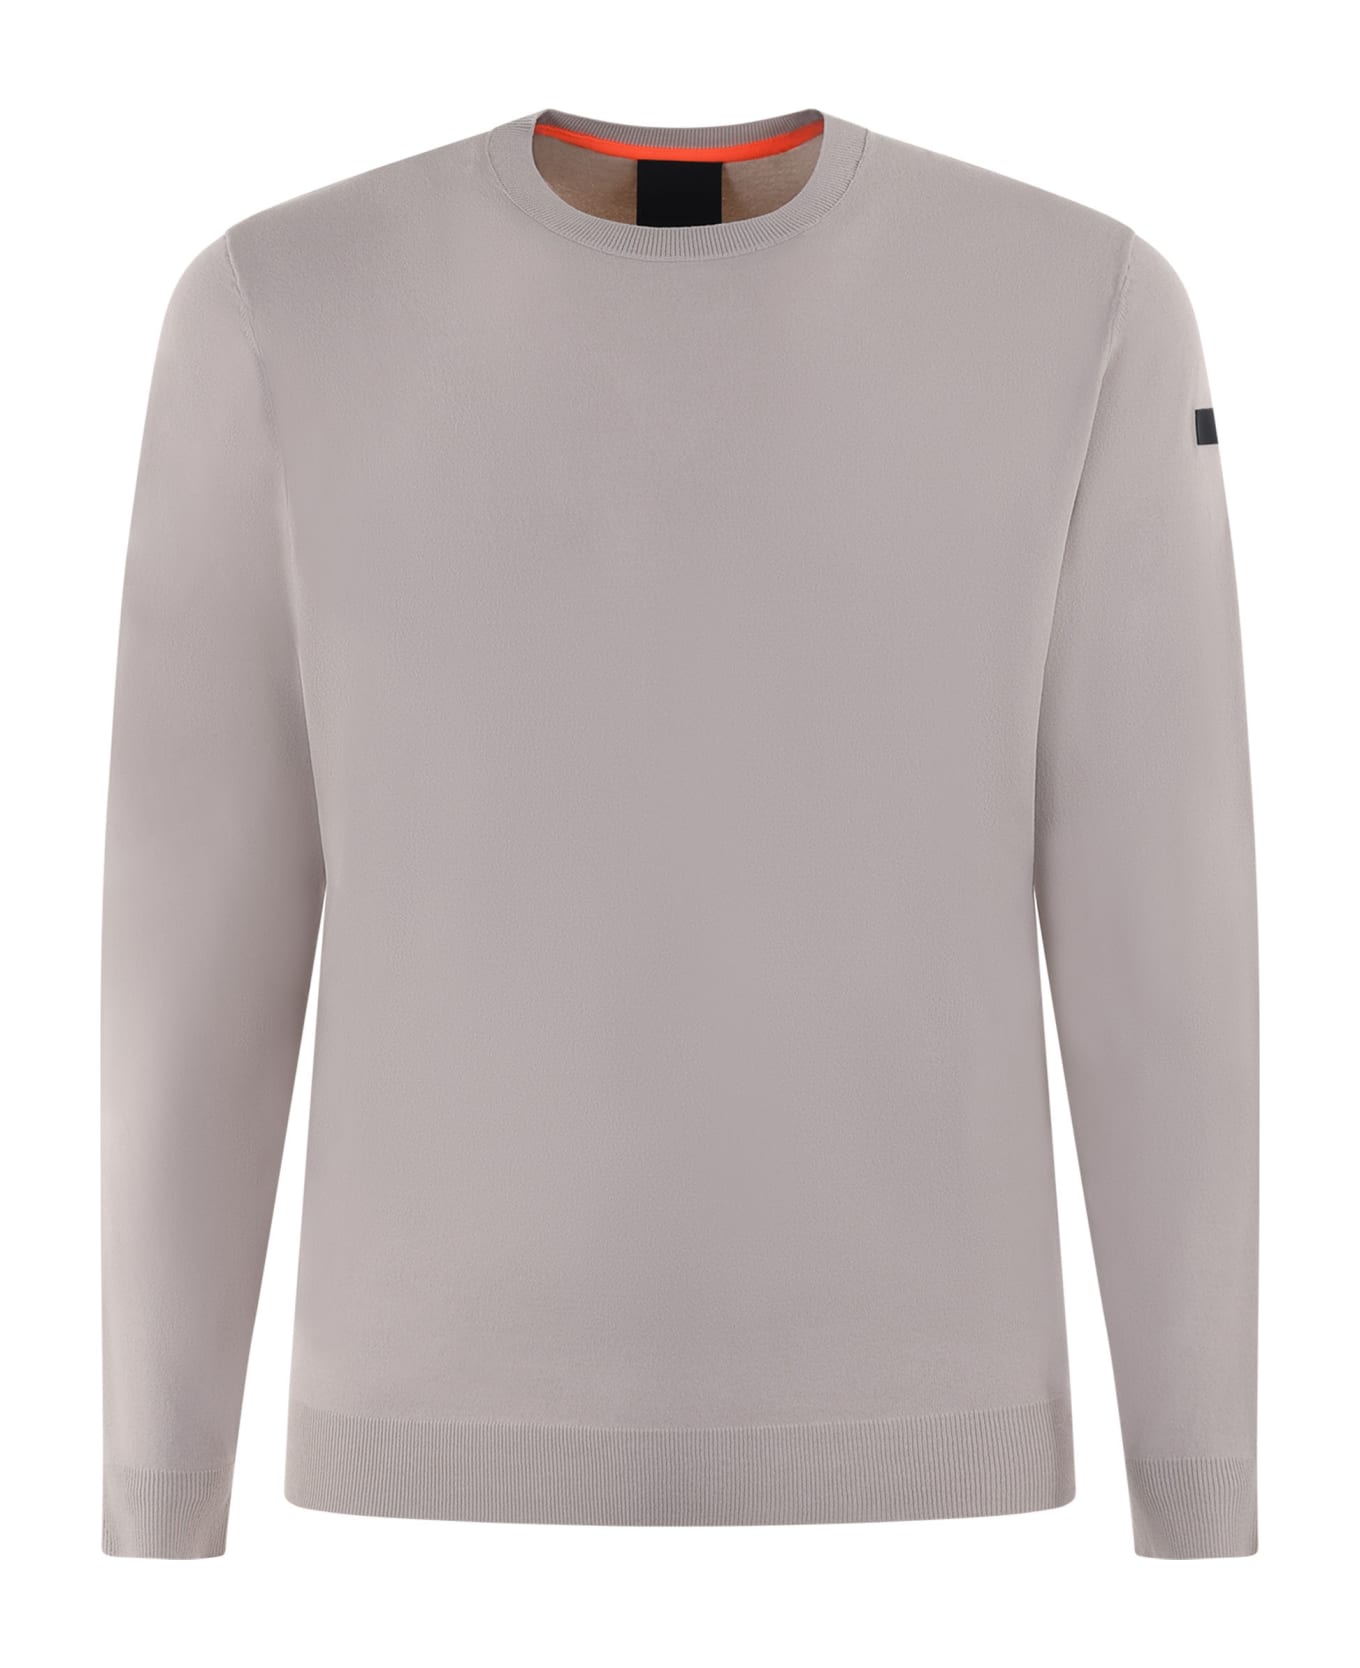 RRD - Roberto Ricci Design Rrd Sweater - Sabbia